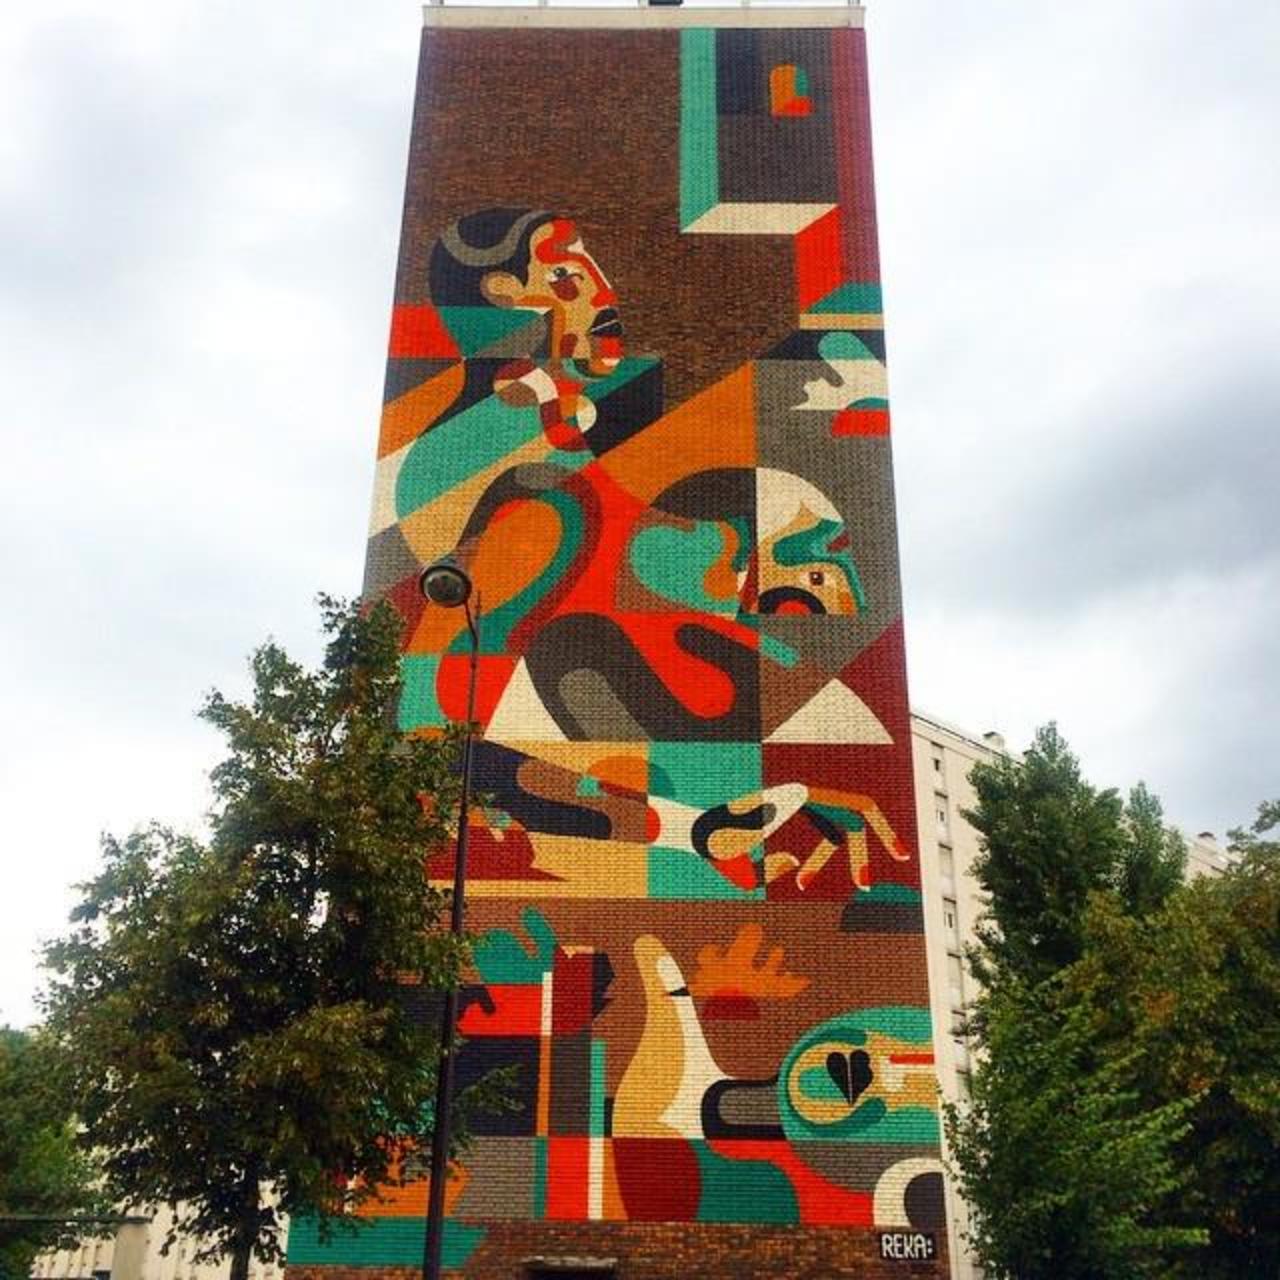 #mural by @rekaone #rekaone #reka #streetart #streetartparis #parisstreetart #paris13 #urbanart #graffiti by benapix http://t.co/P3fukBw4qf